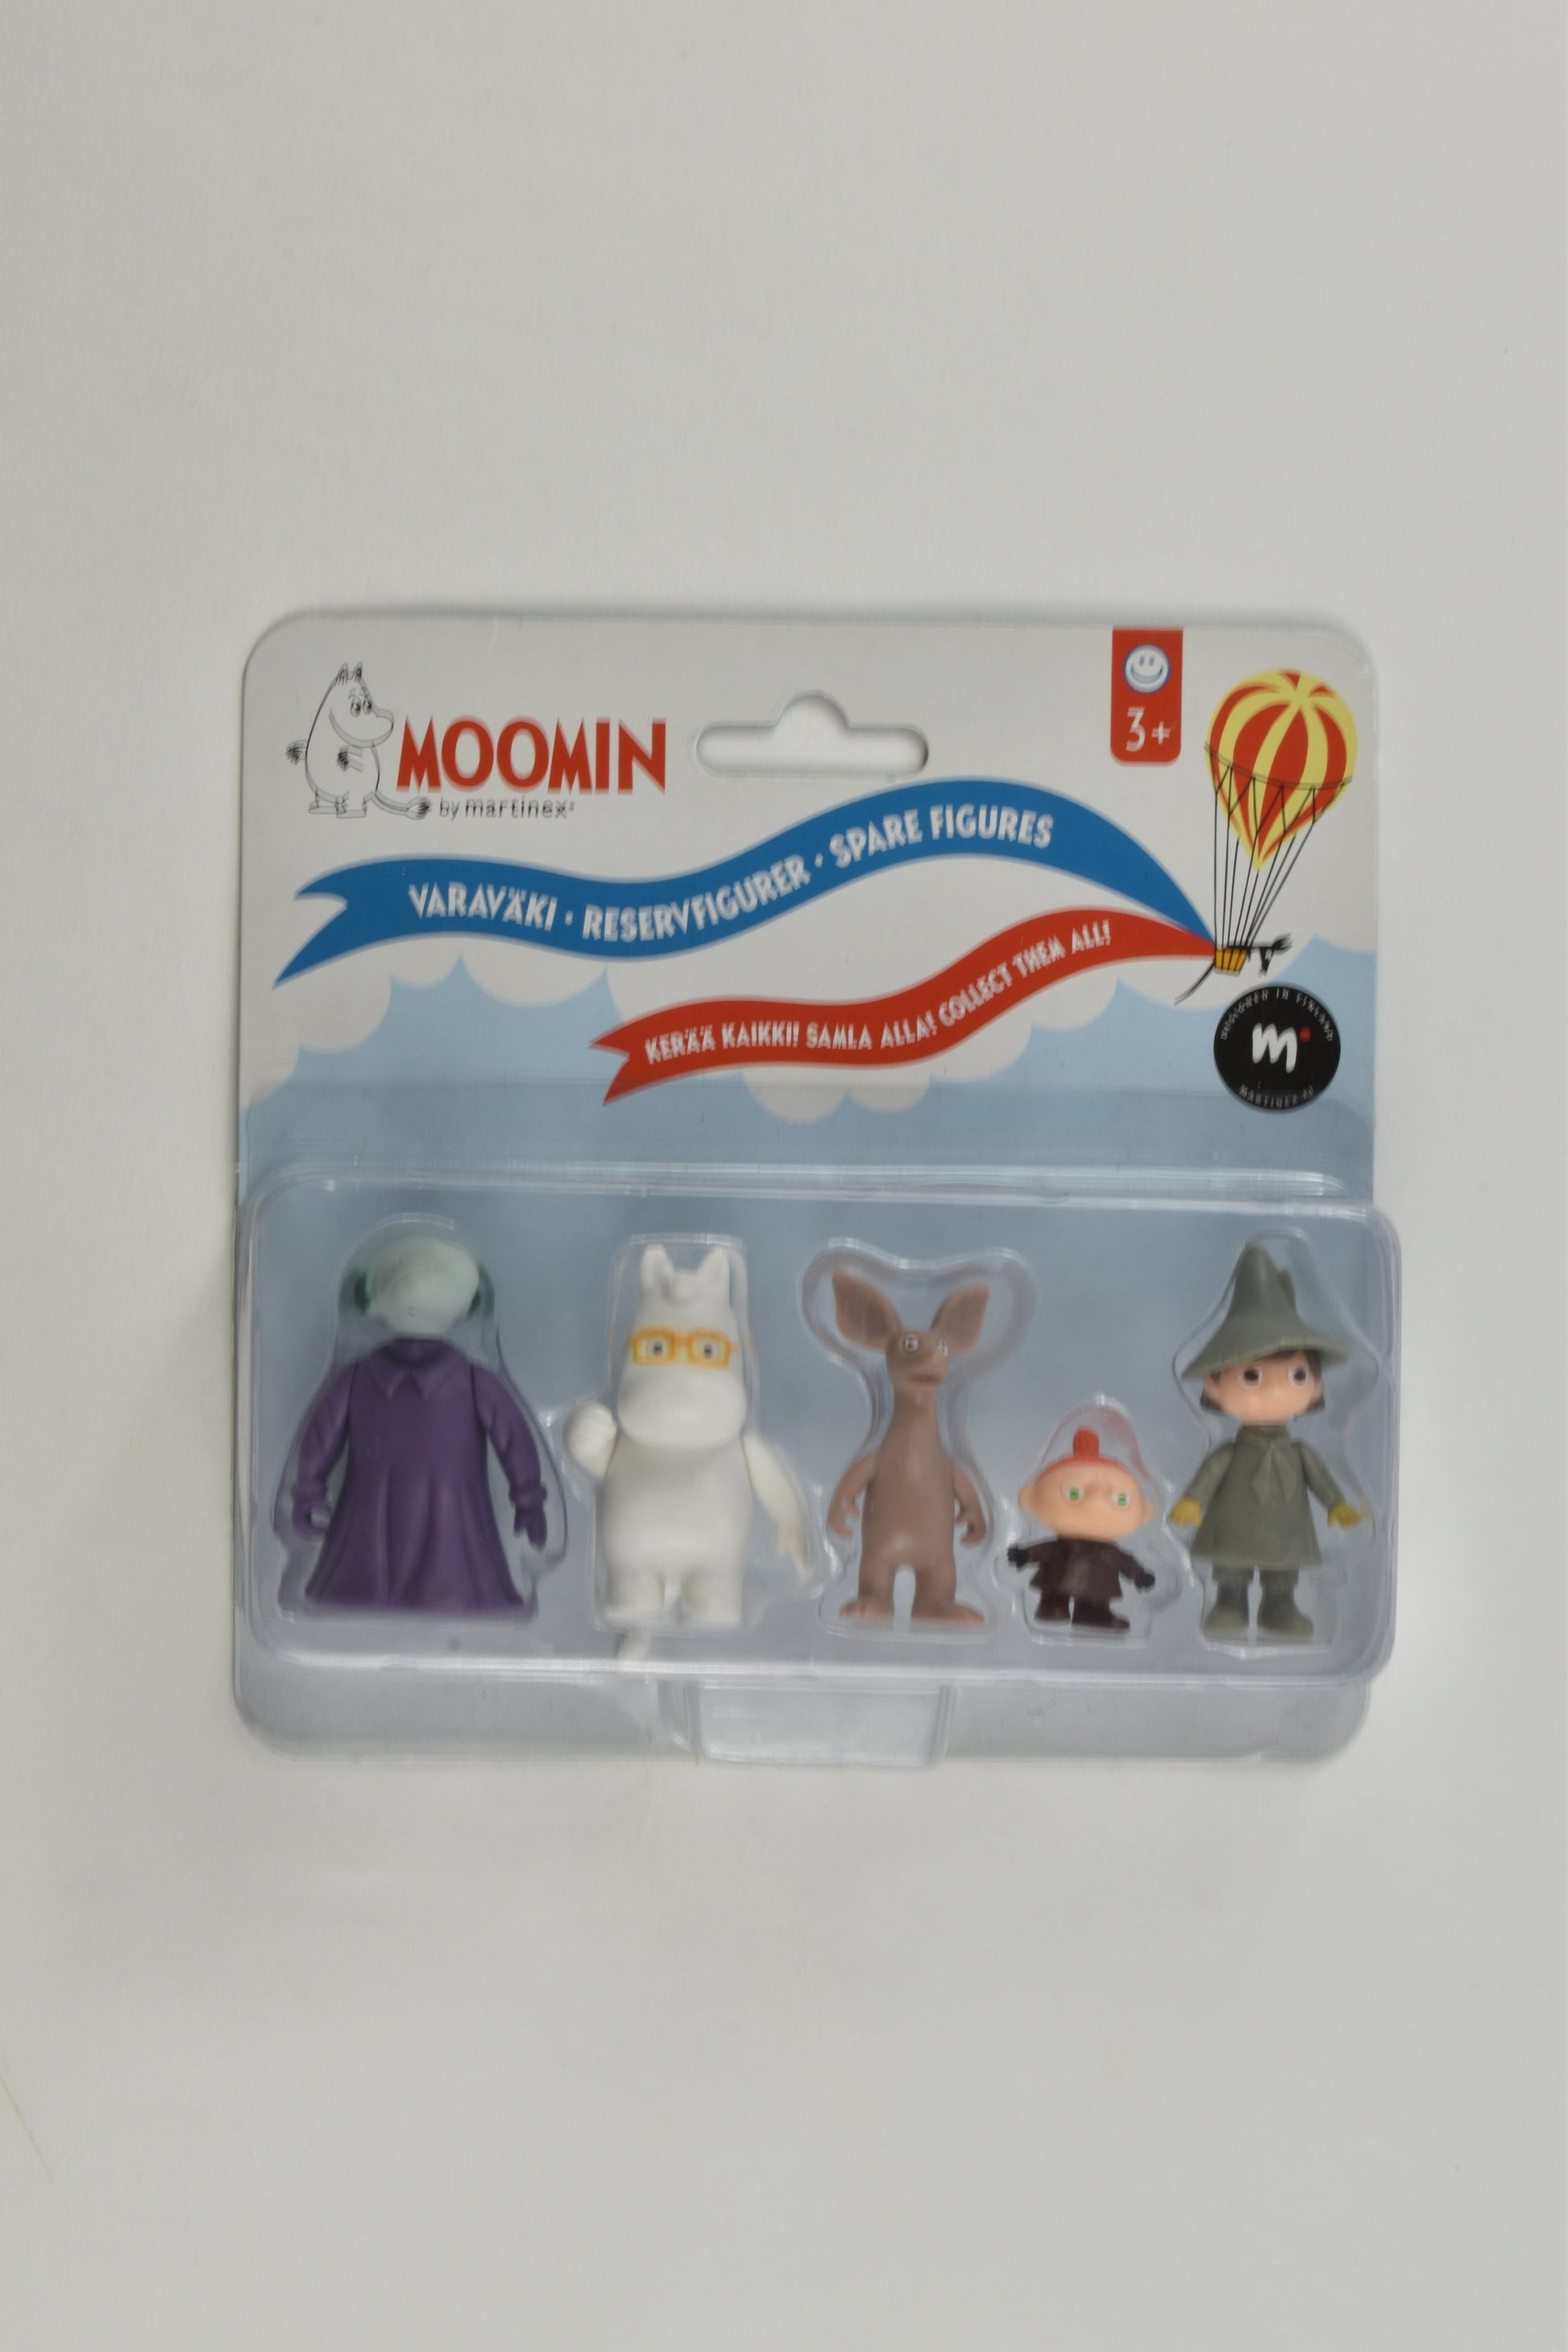 NEW Martinex (Finland) Moomin Figures